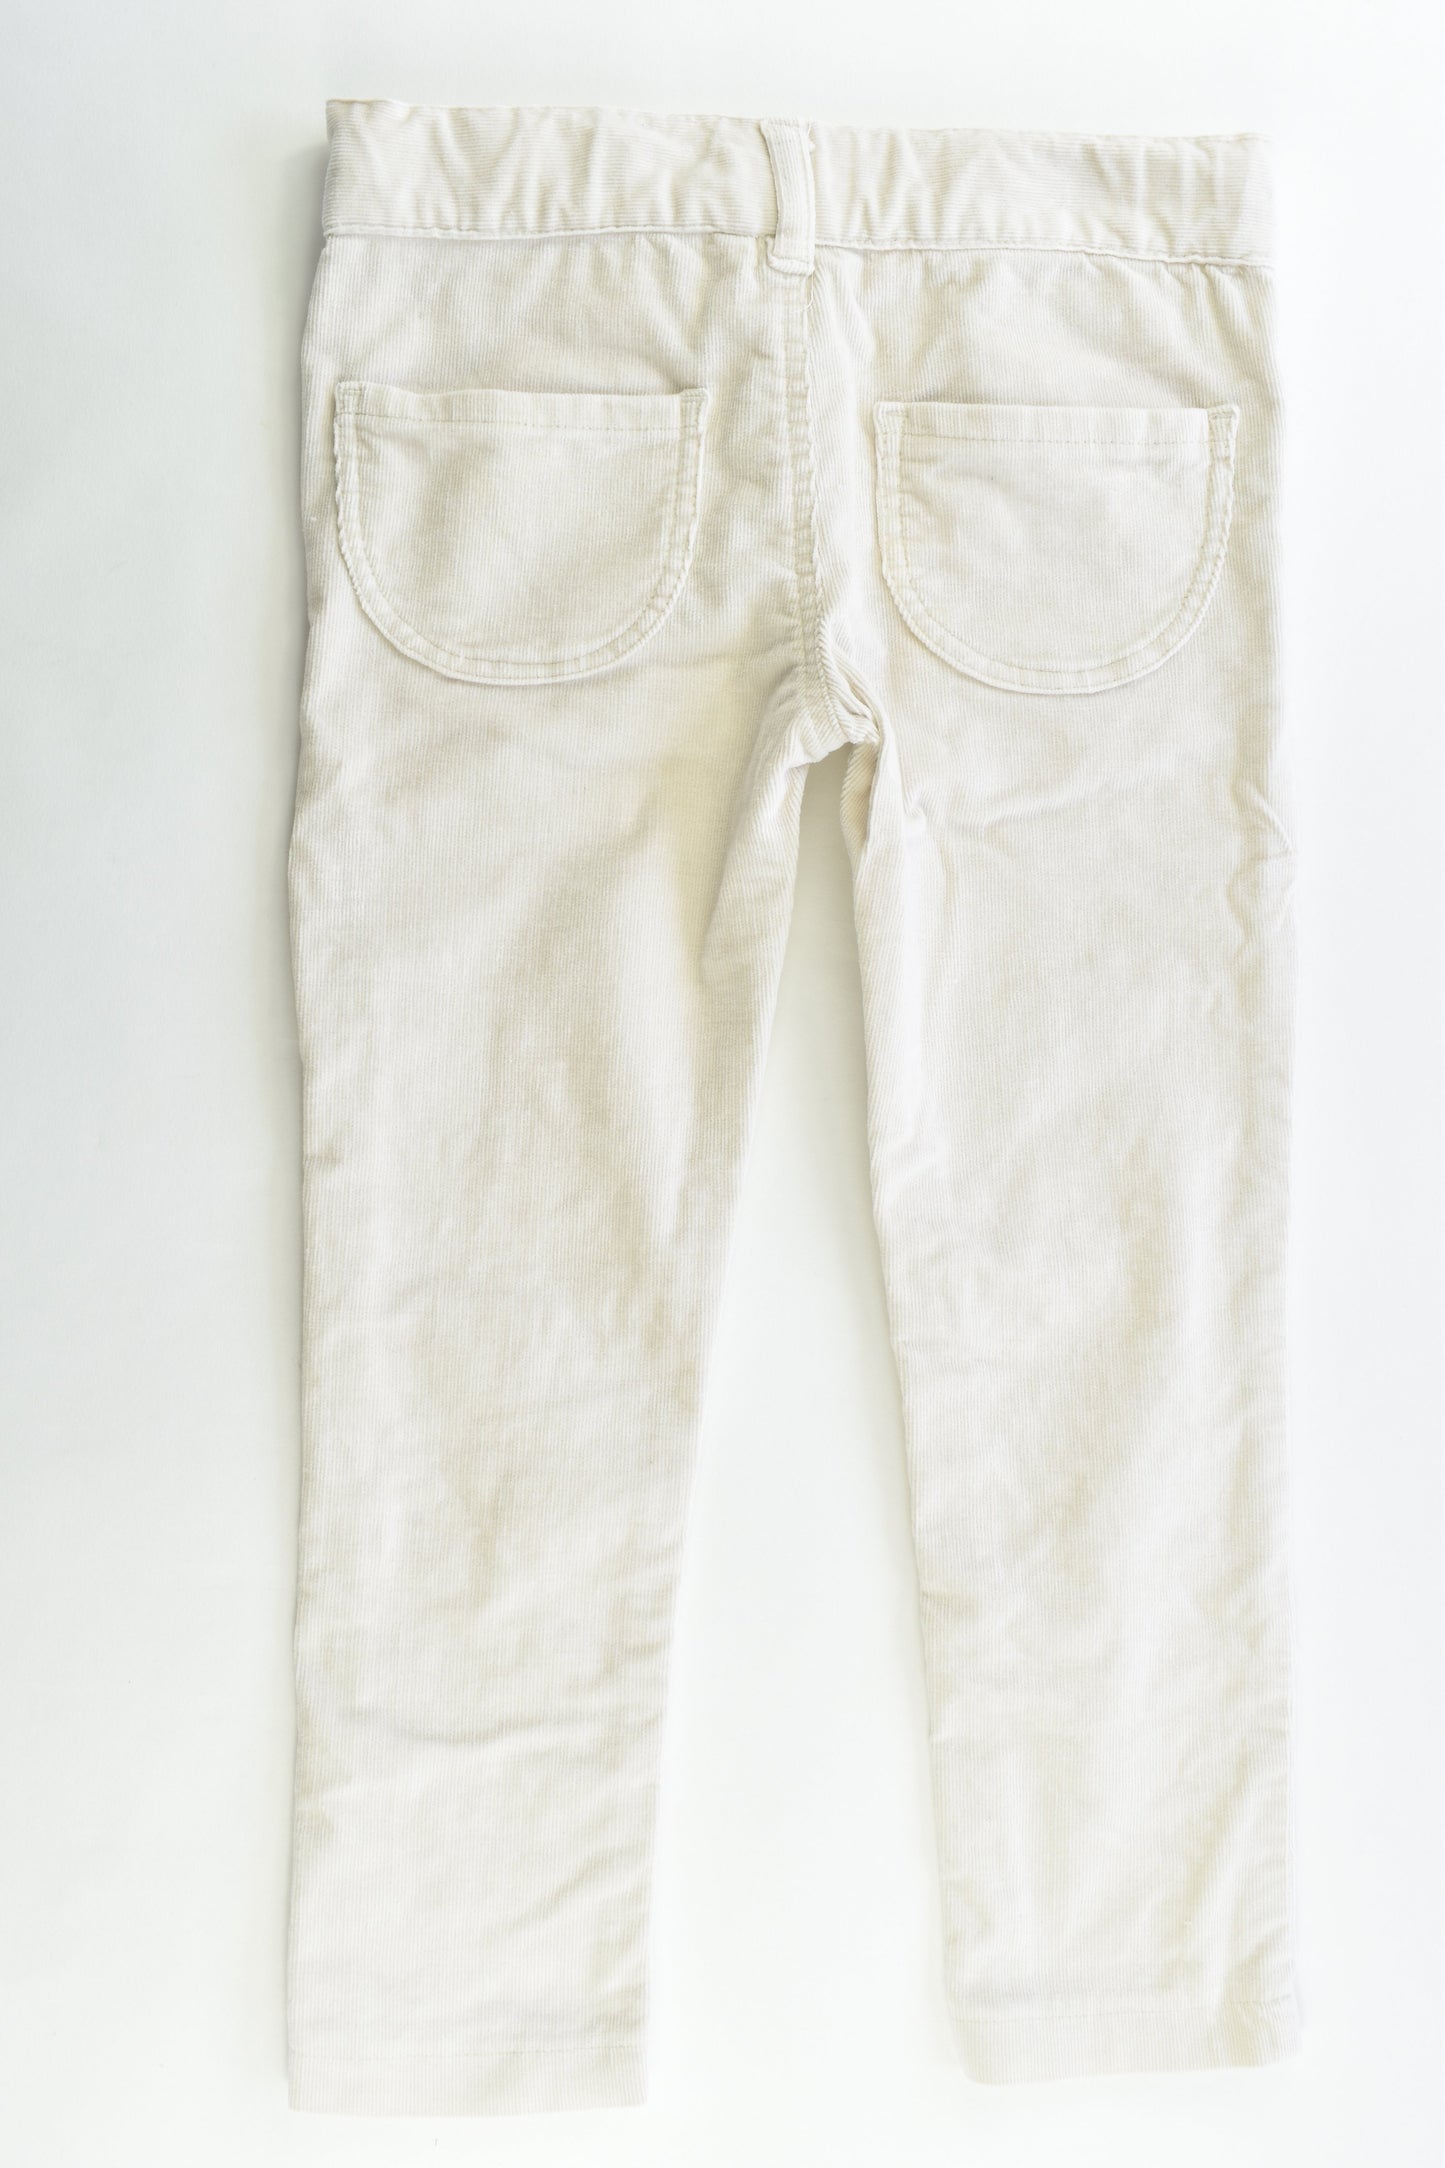 Tea Princess (Sydney) Size 4-5 Stretchy Cord Pants with Lace Details